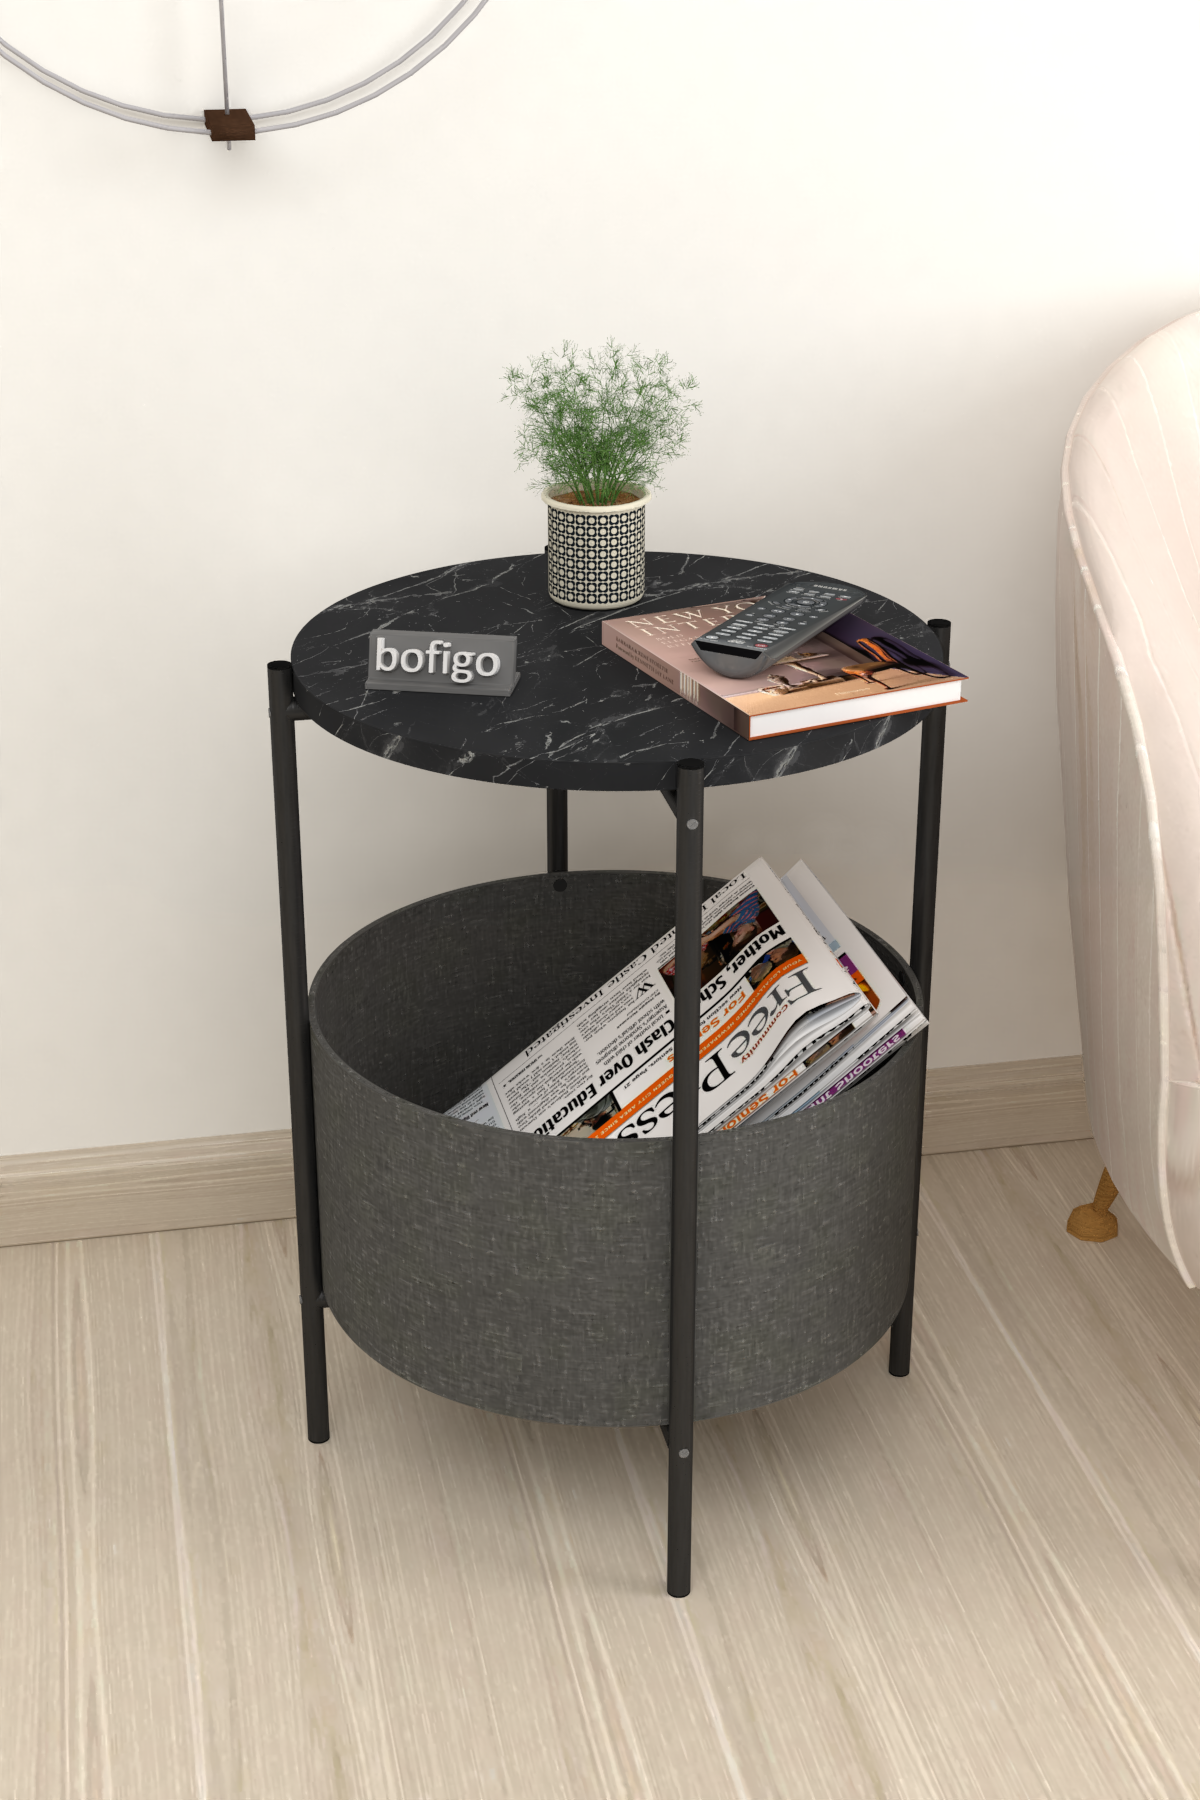 Bofigo Coffee Table with Bag Newspaper Holder Bookshelf  Flowerpot Bendir